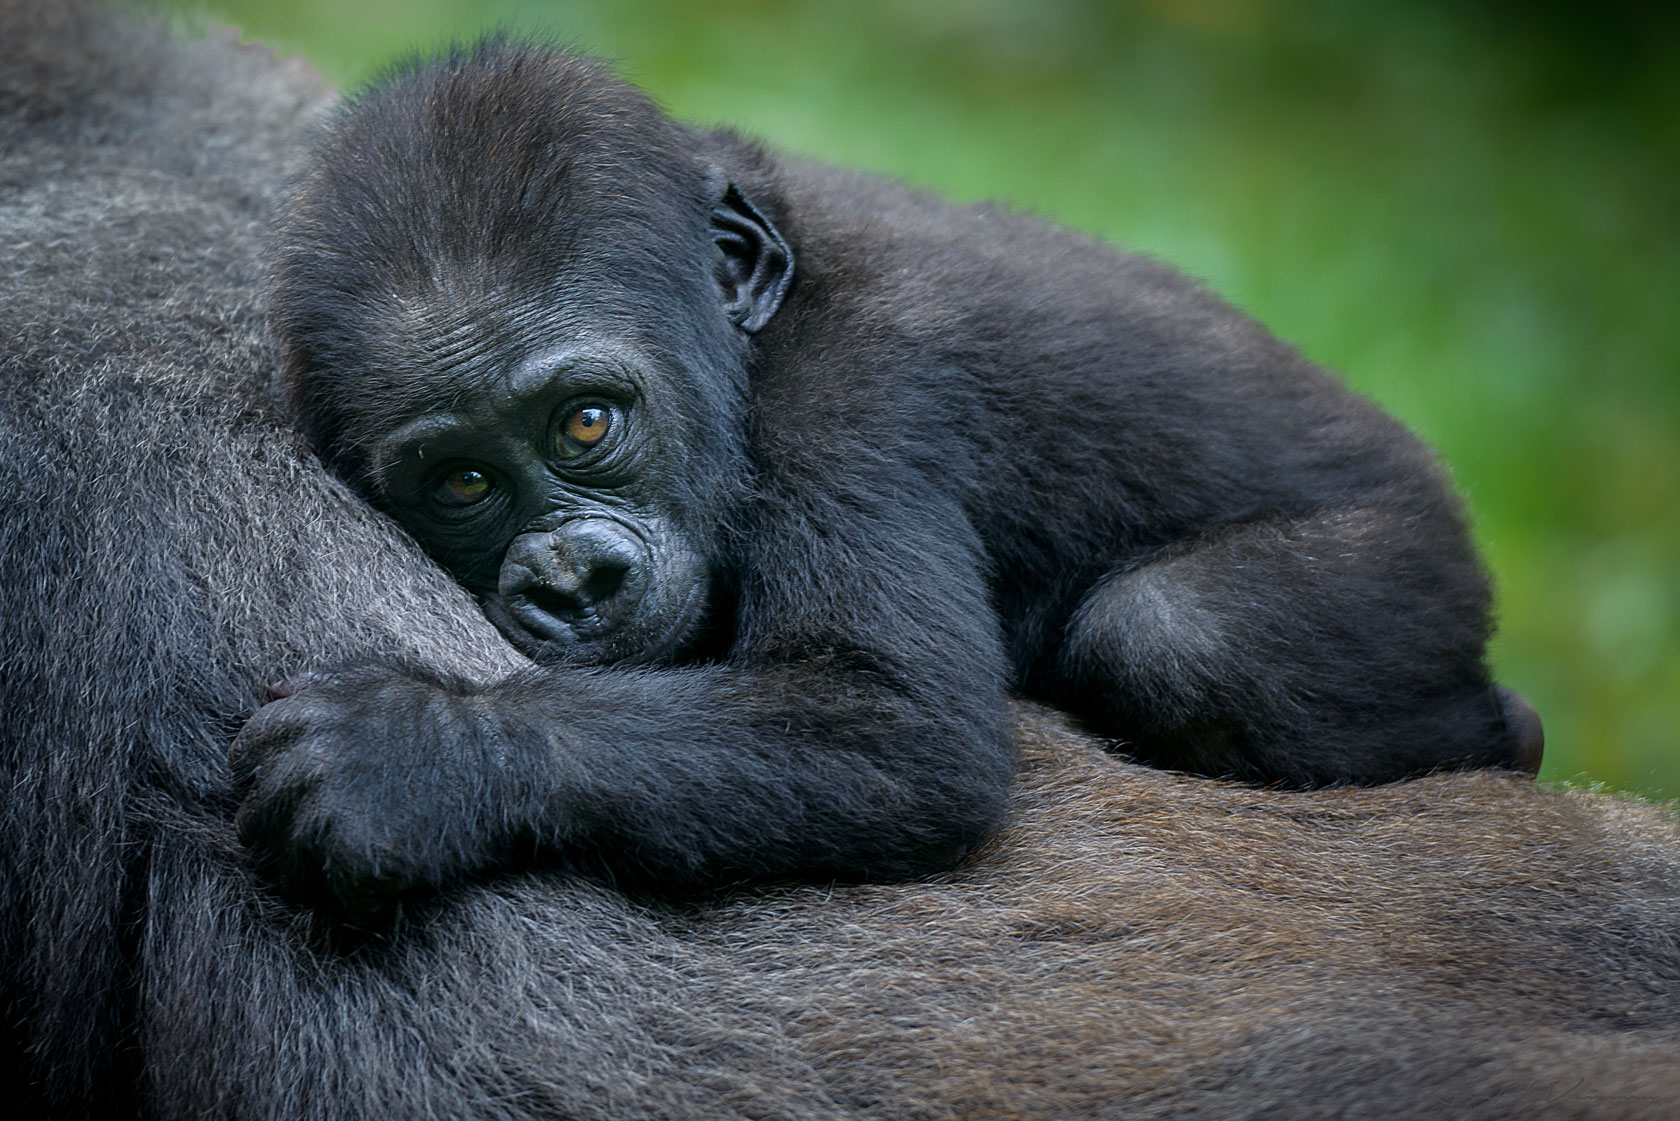 A gorilla baby